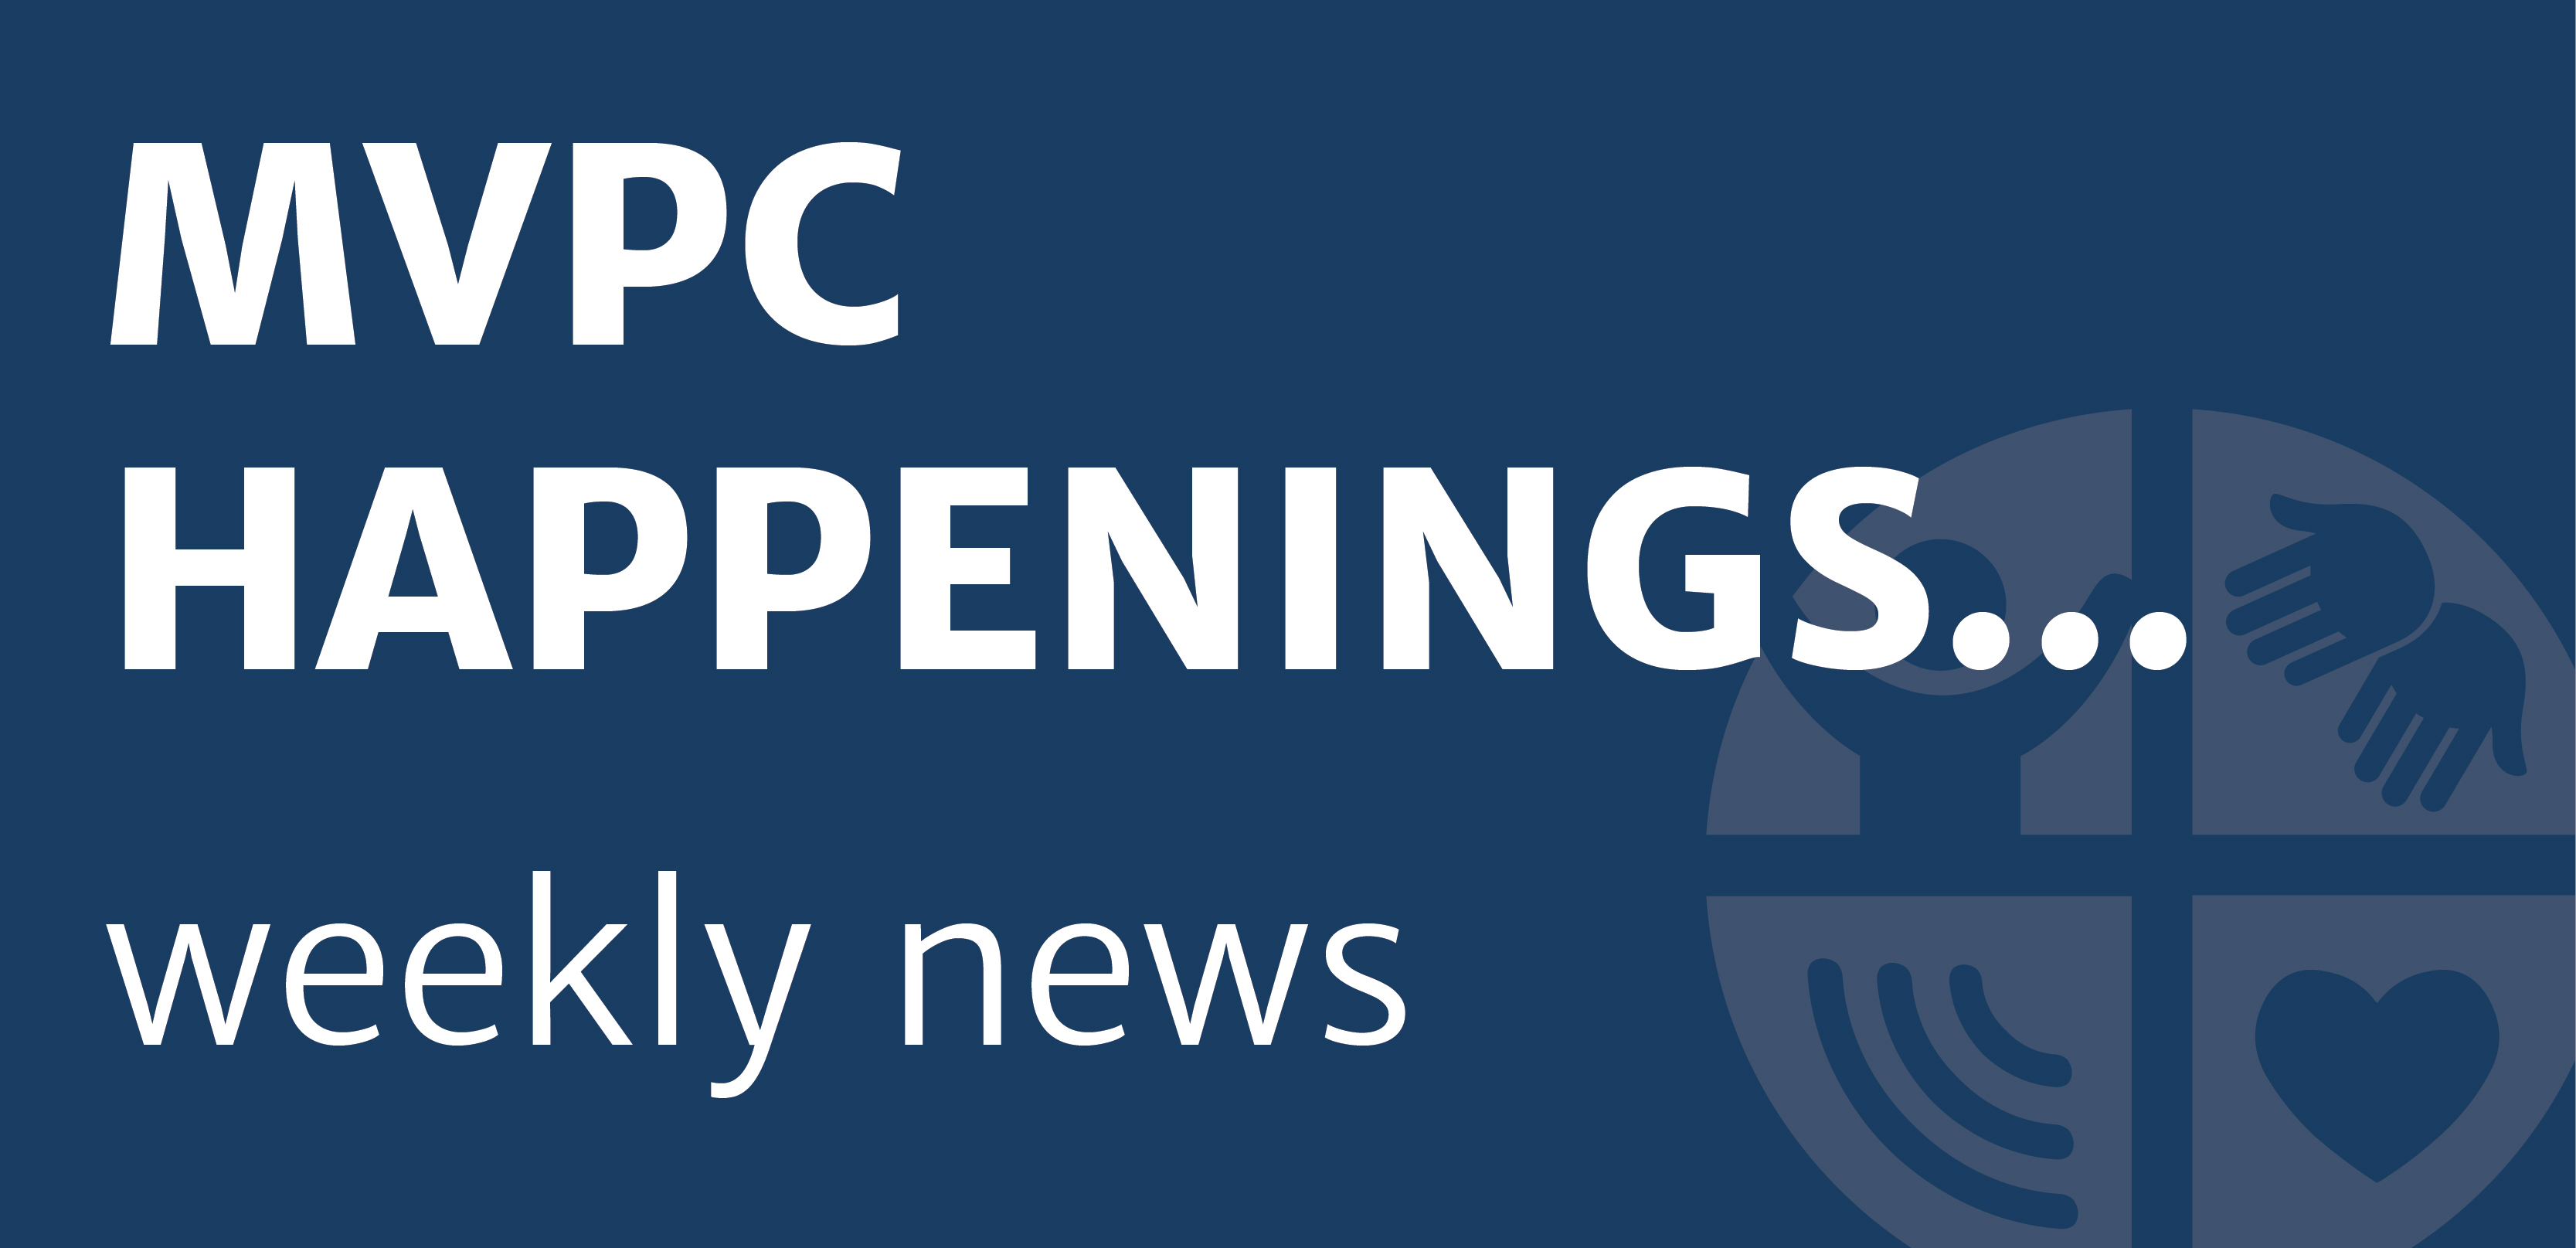 MVPC Happenings... Weekly news at Mount Vernon Presbyterian Church